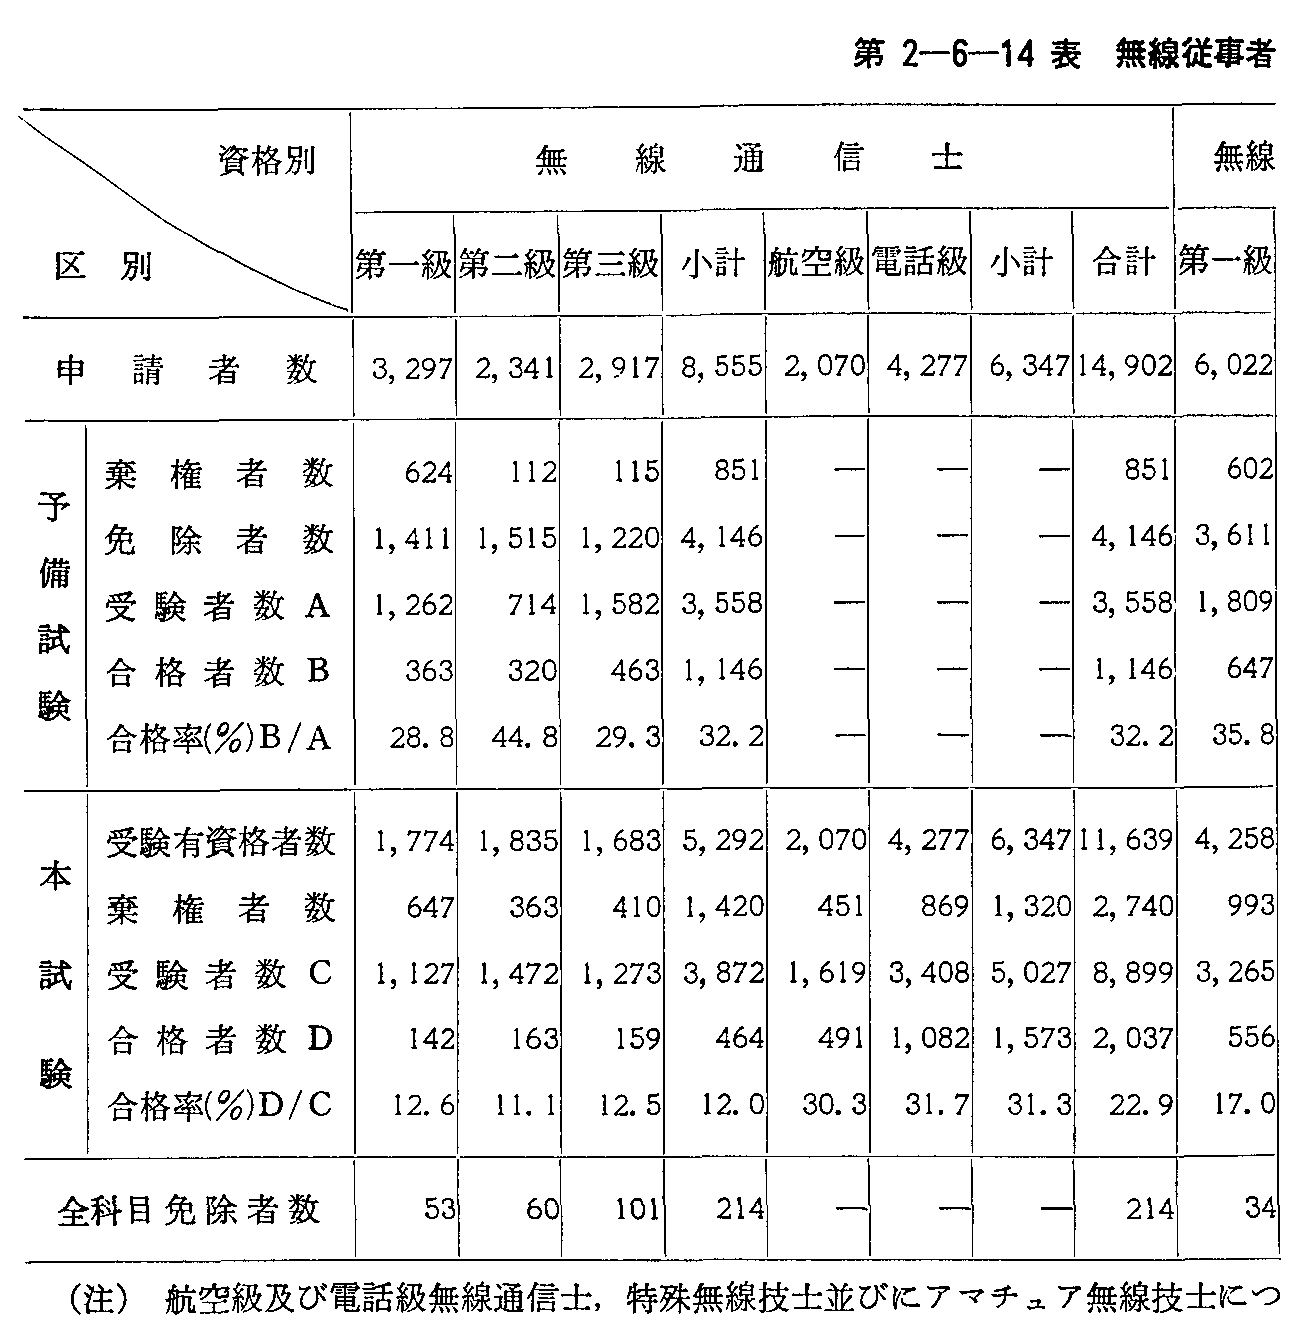 2-6-14\ ]ҍƎ{s(58Nx)(1)